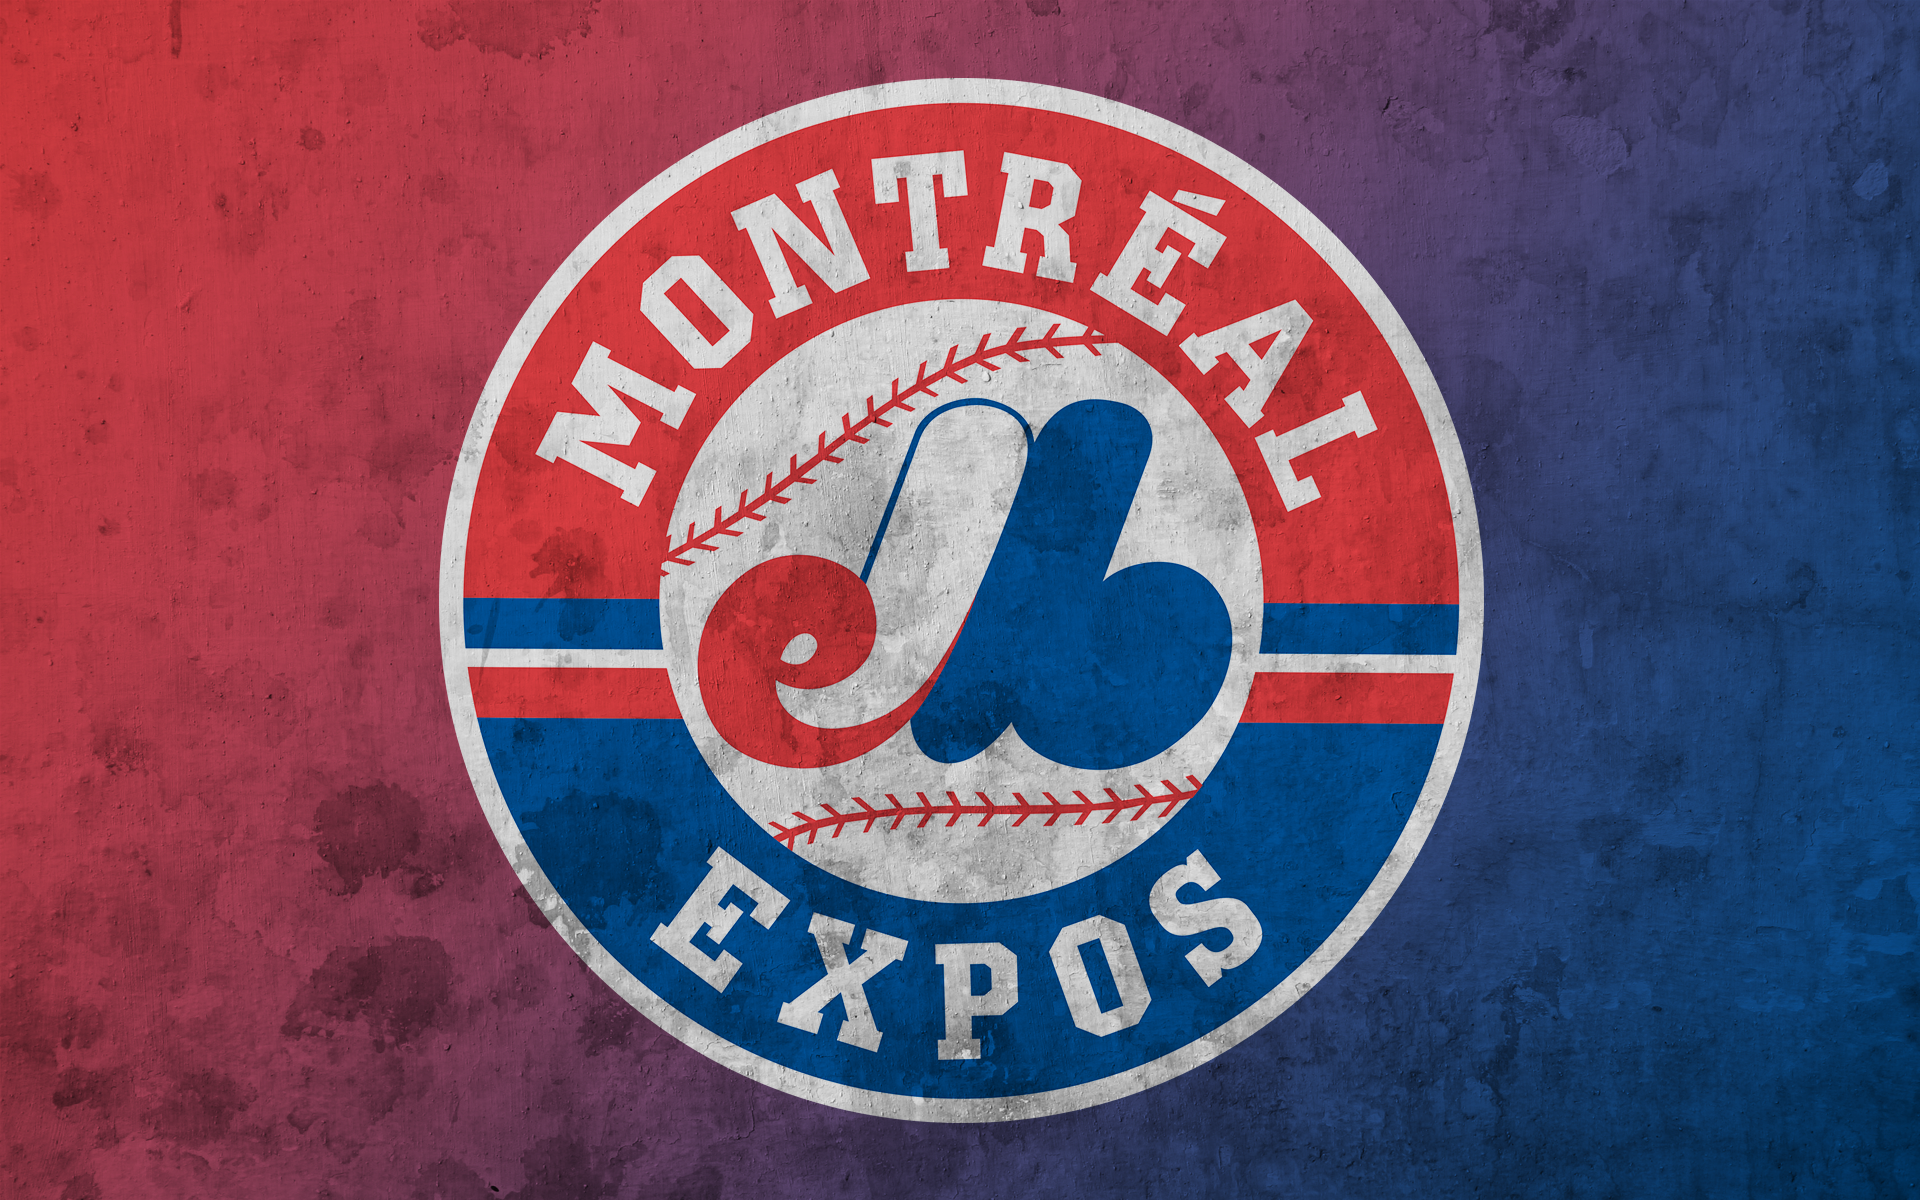 I made logo wallpapers for you! : baseball